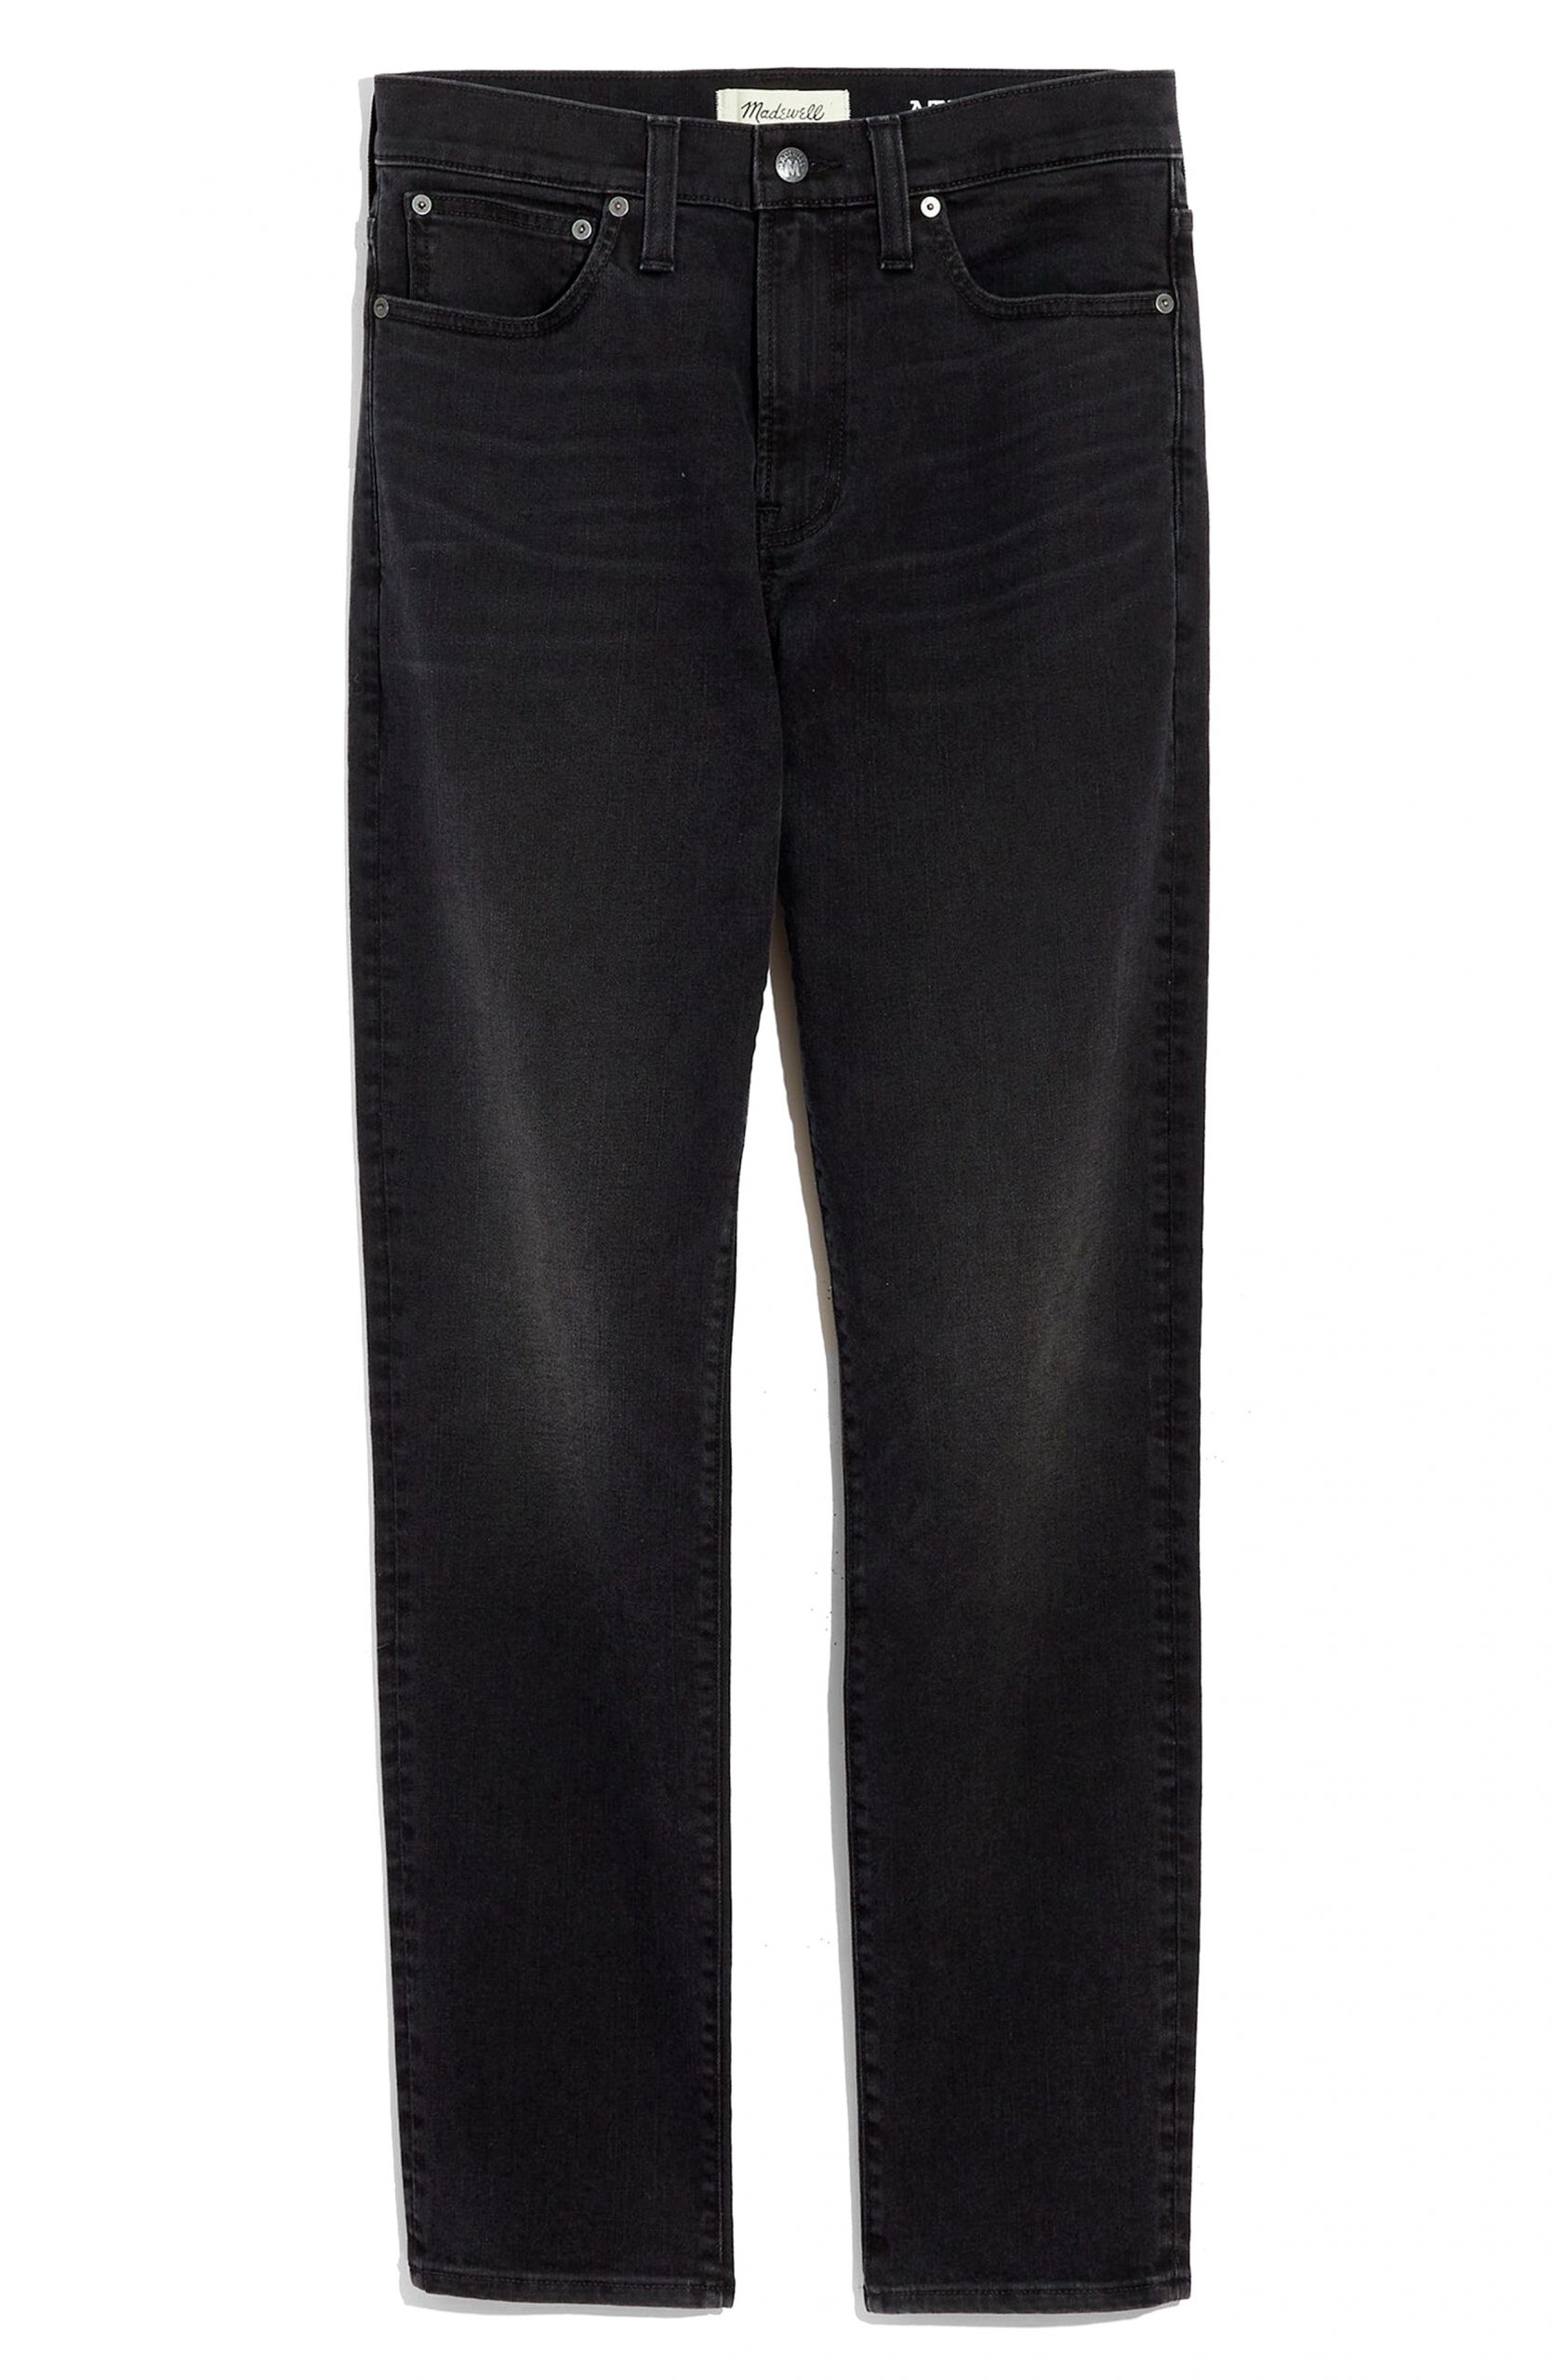 Men’s Madewell Athletic Slim Authentic Flex Jeans, Size 29 x 32 - Black ...